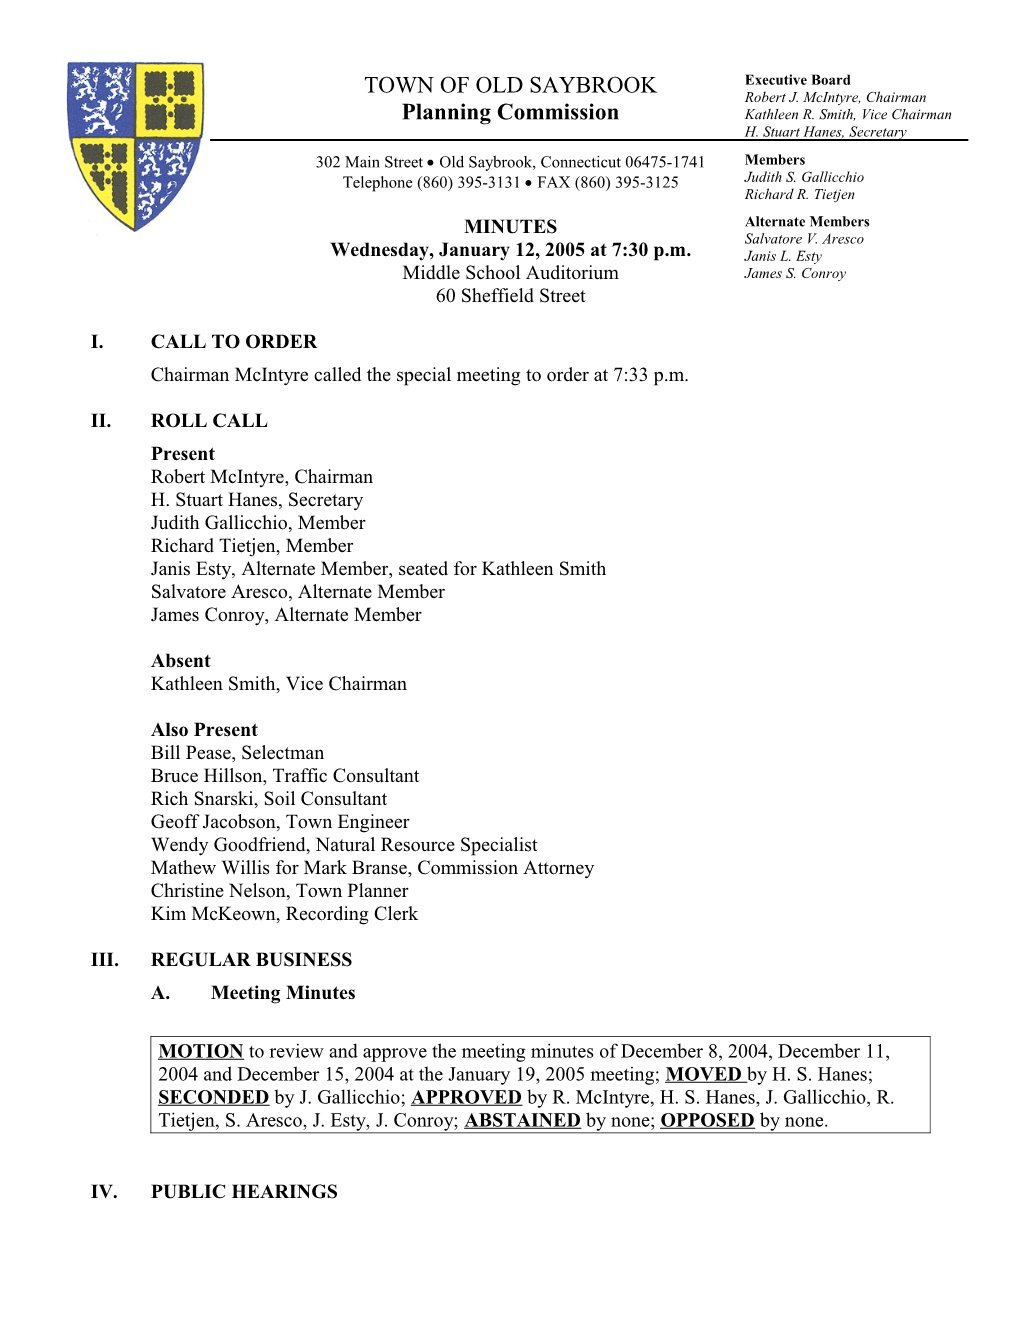 Old Saybrook Planning Commission Meeting Agenda January 12, 2005